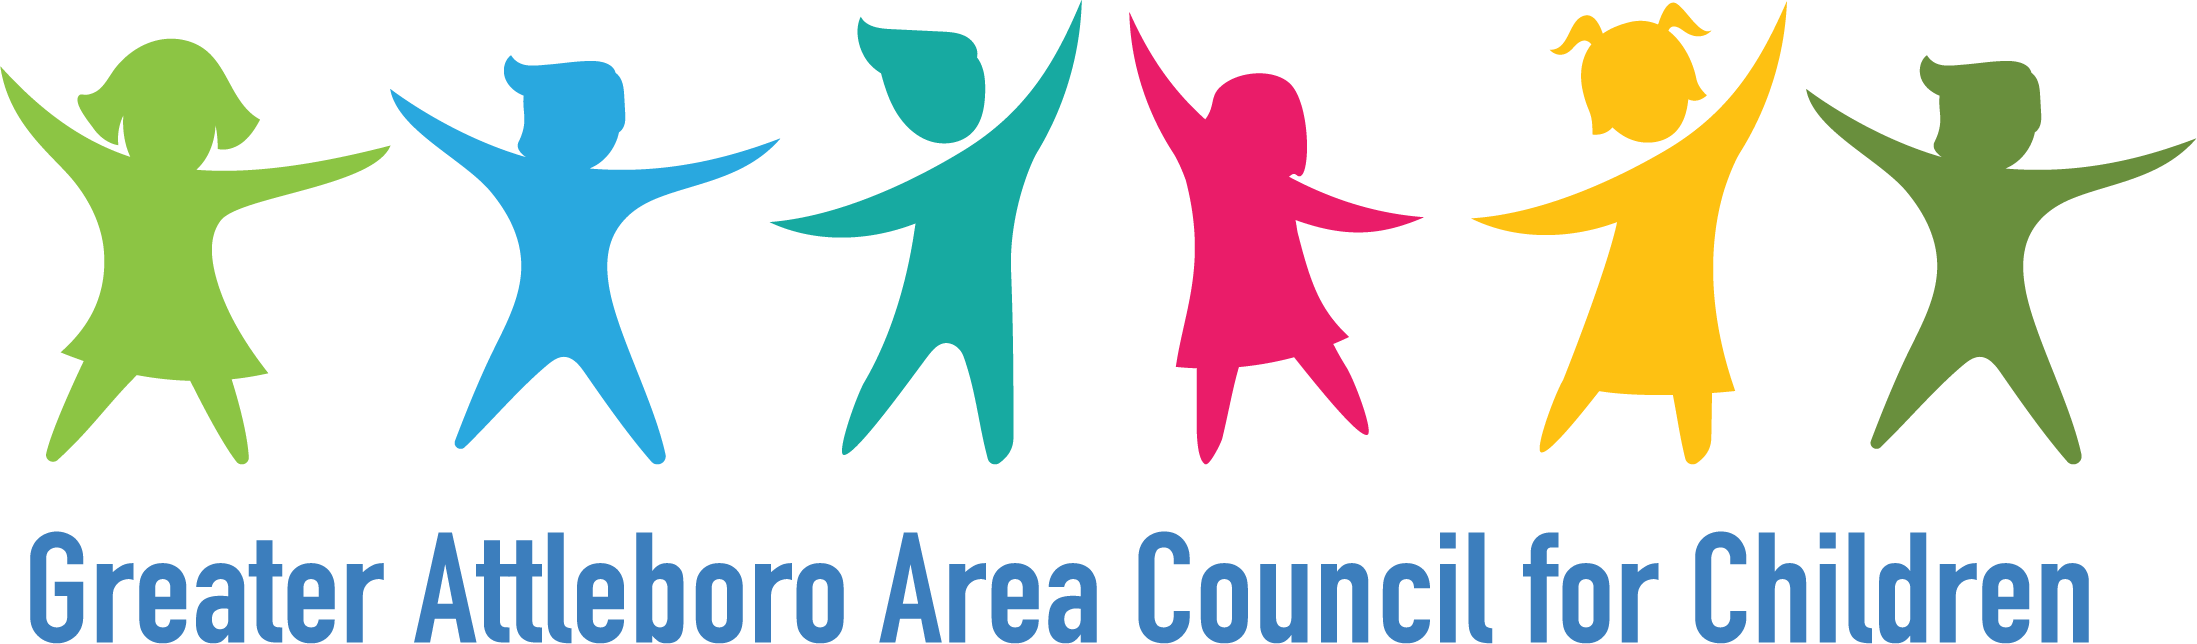 Greater Attleboro Council for Children